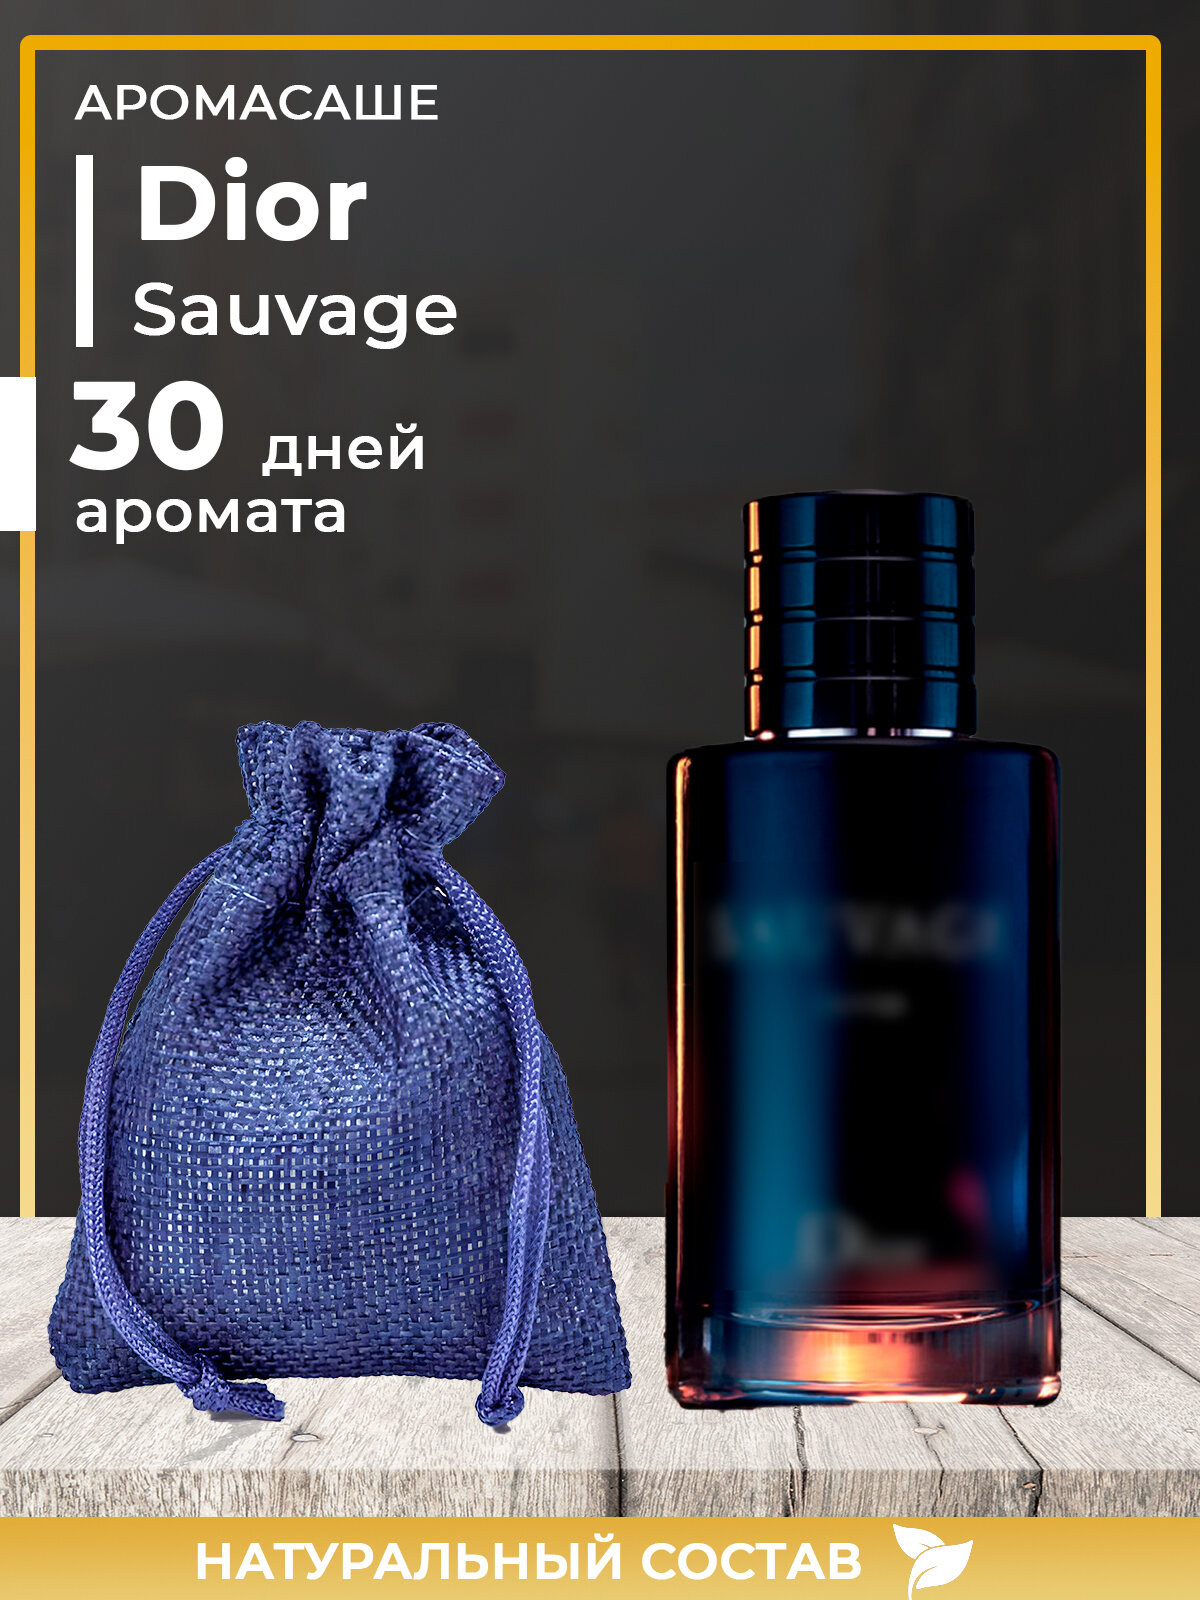 Ароматическое саше по мотивам Dior Sauvage Parfum